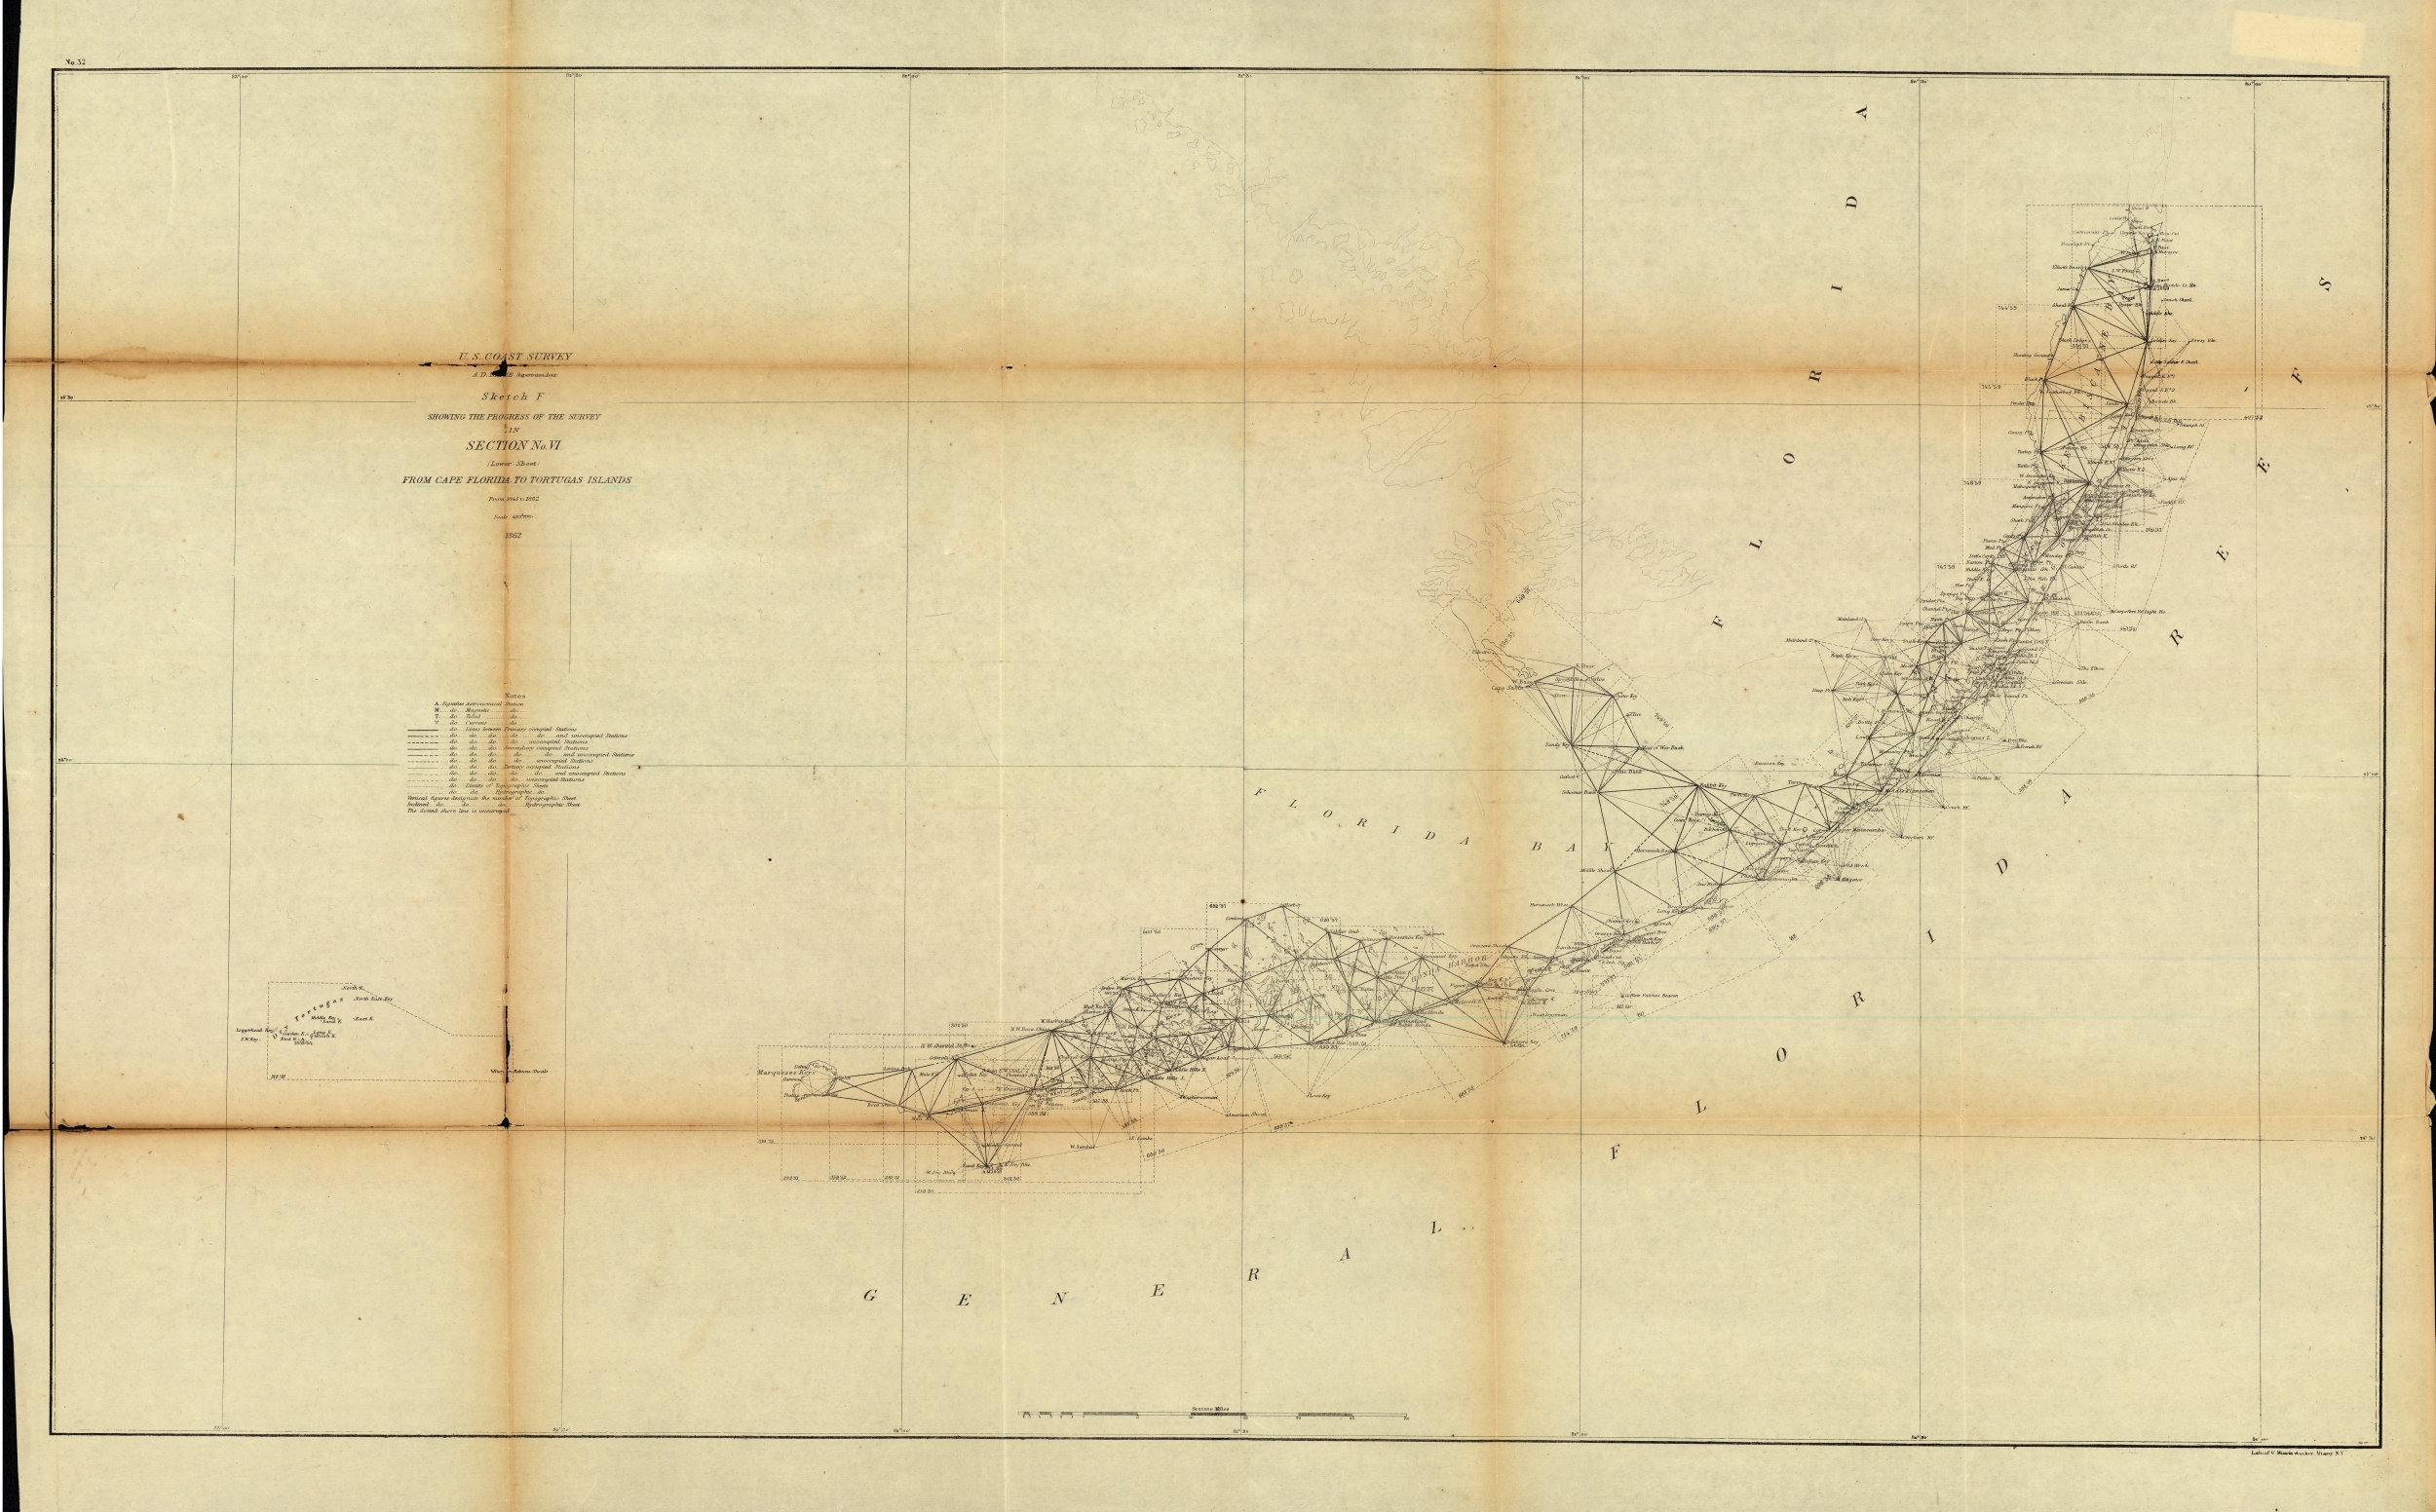 U.S. Coast Survey, Florida Peninsula, 1862